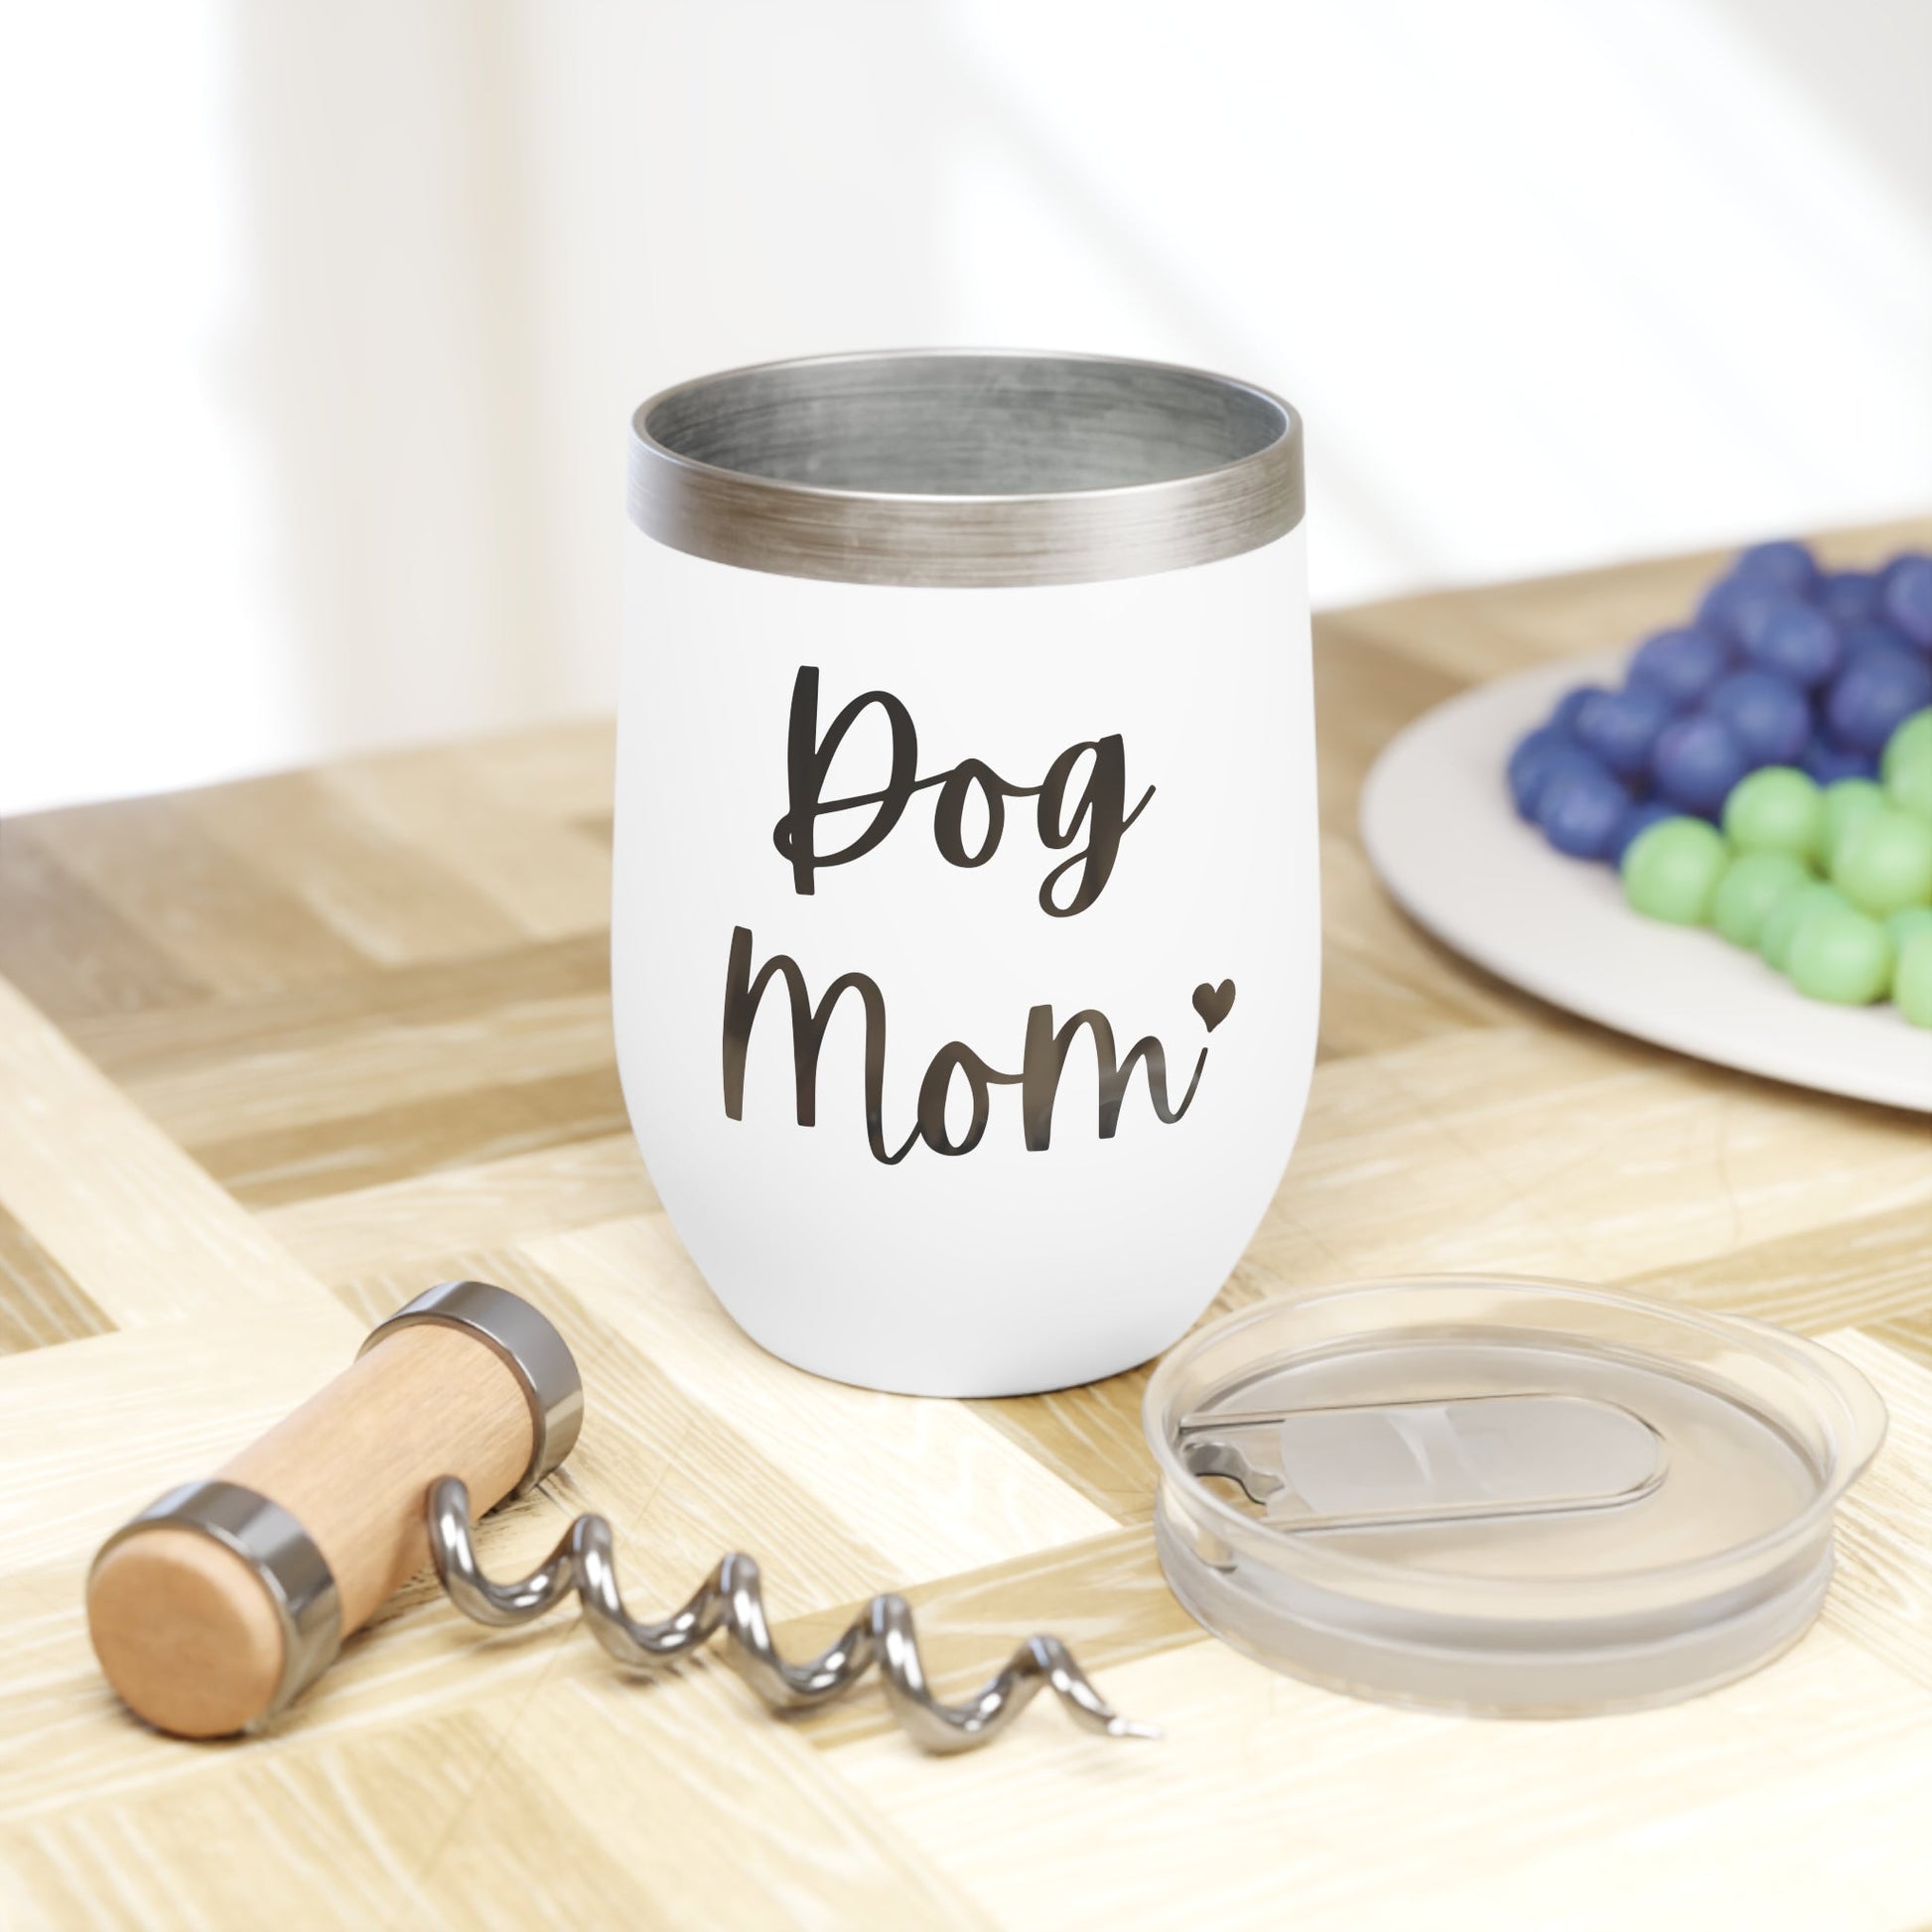 Dog Mom | Wine Tumbler - Detezi Designs-11305223360550098150